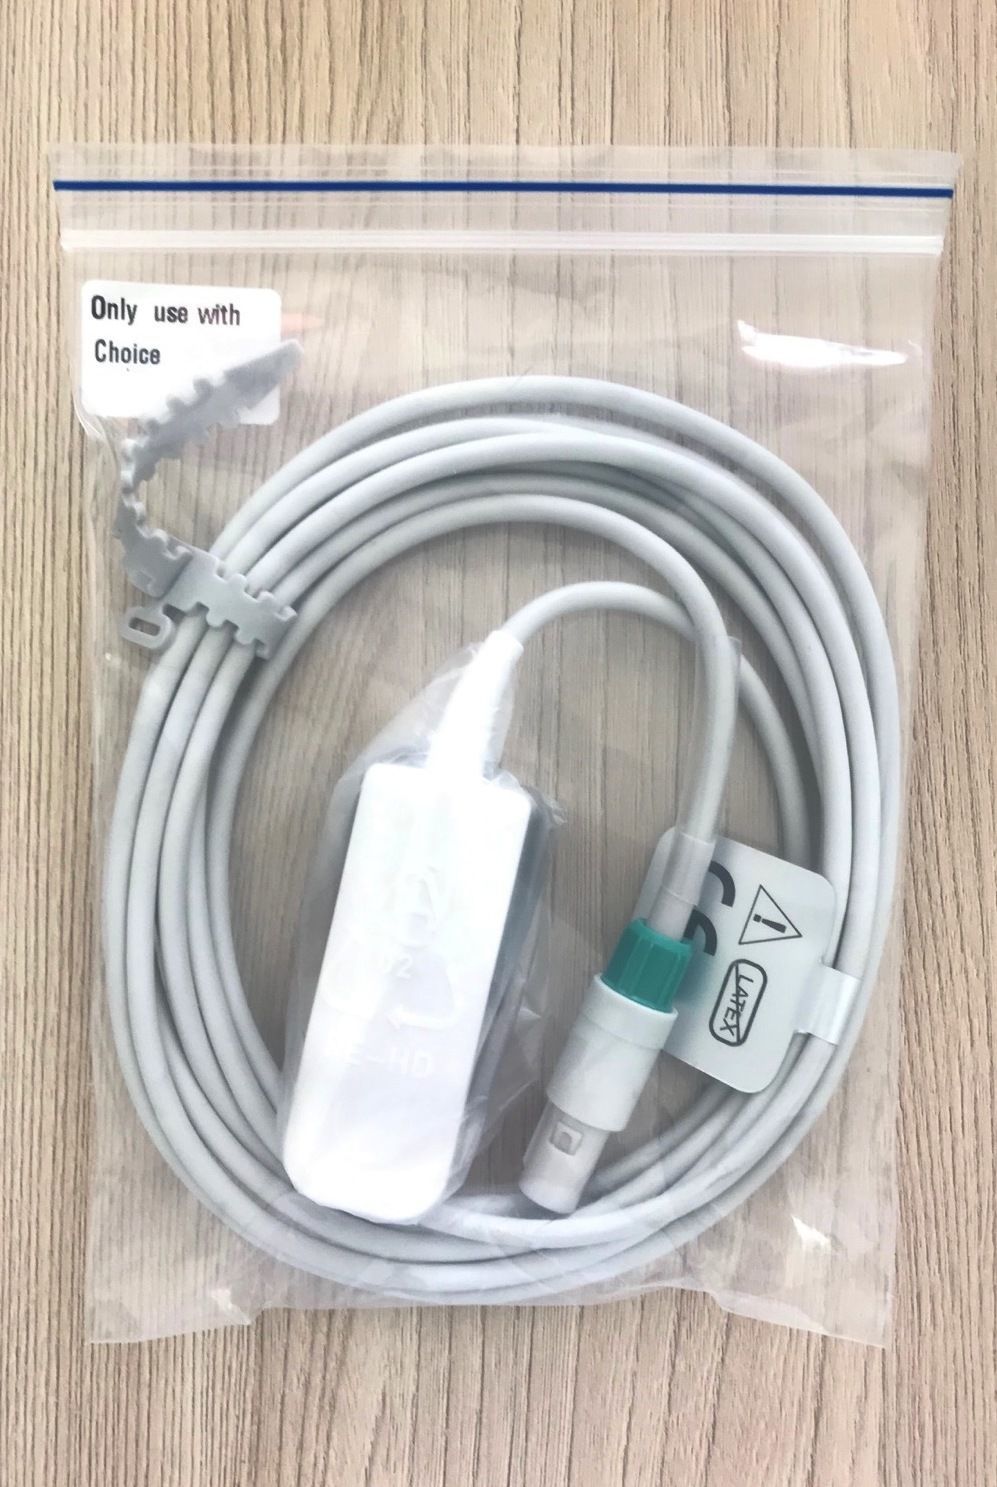 Spo2 Adult cable Spo2 probe for patient monitor ChoiceMed M50E_สายโพรบวัดออกซิเจนปลายนิ้วเครื่องมอนิเตอร์ผู้ป่วย ChoiceMed รุ่น M50E